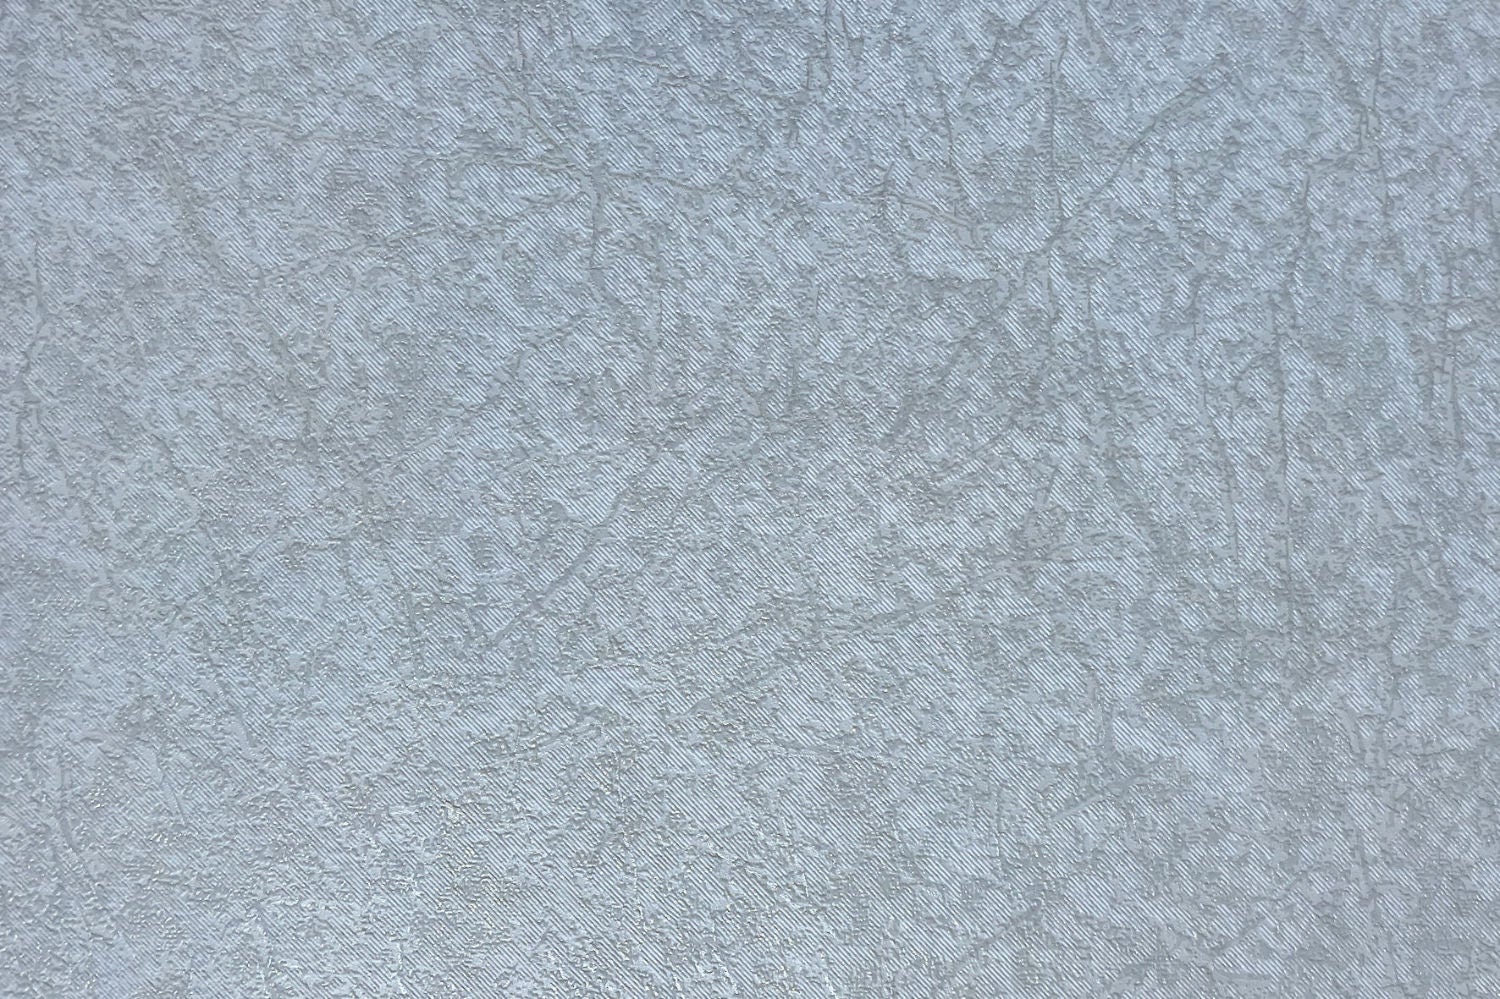 Tapet vinil, model textura, MallDeco Klein 1412/1, 10.05 x 1.06 m